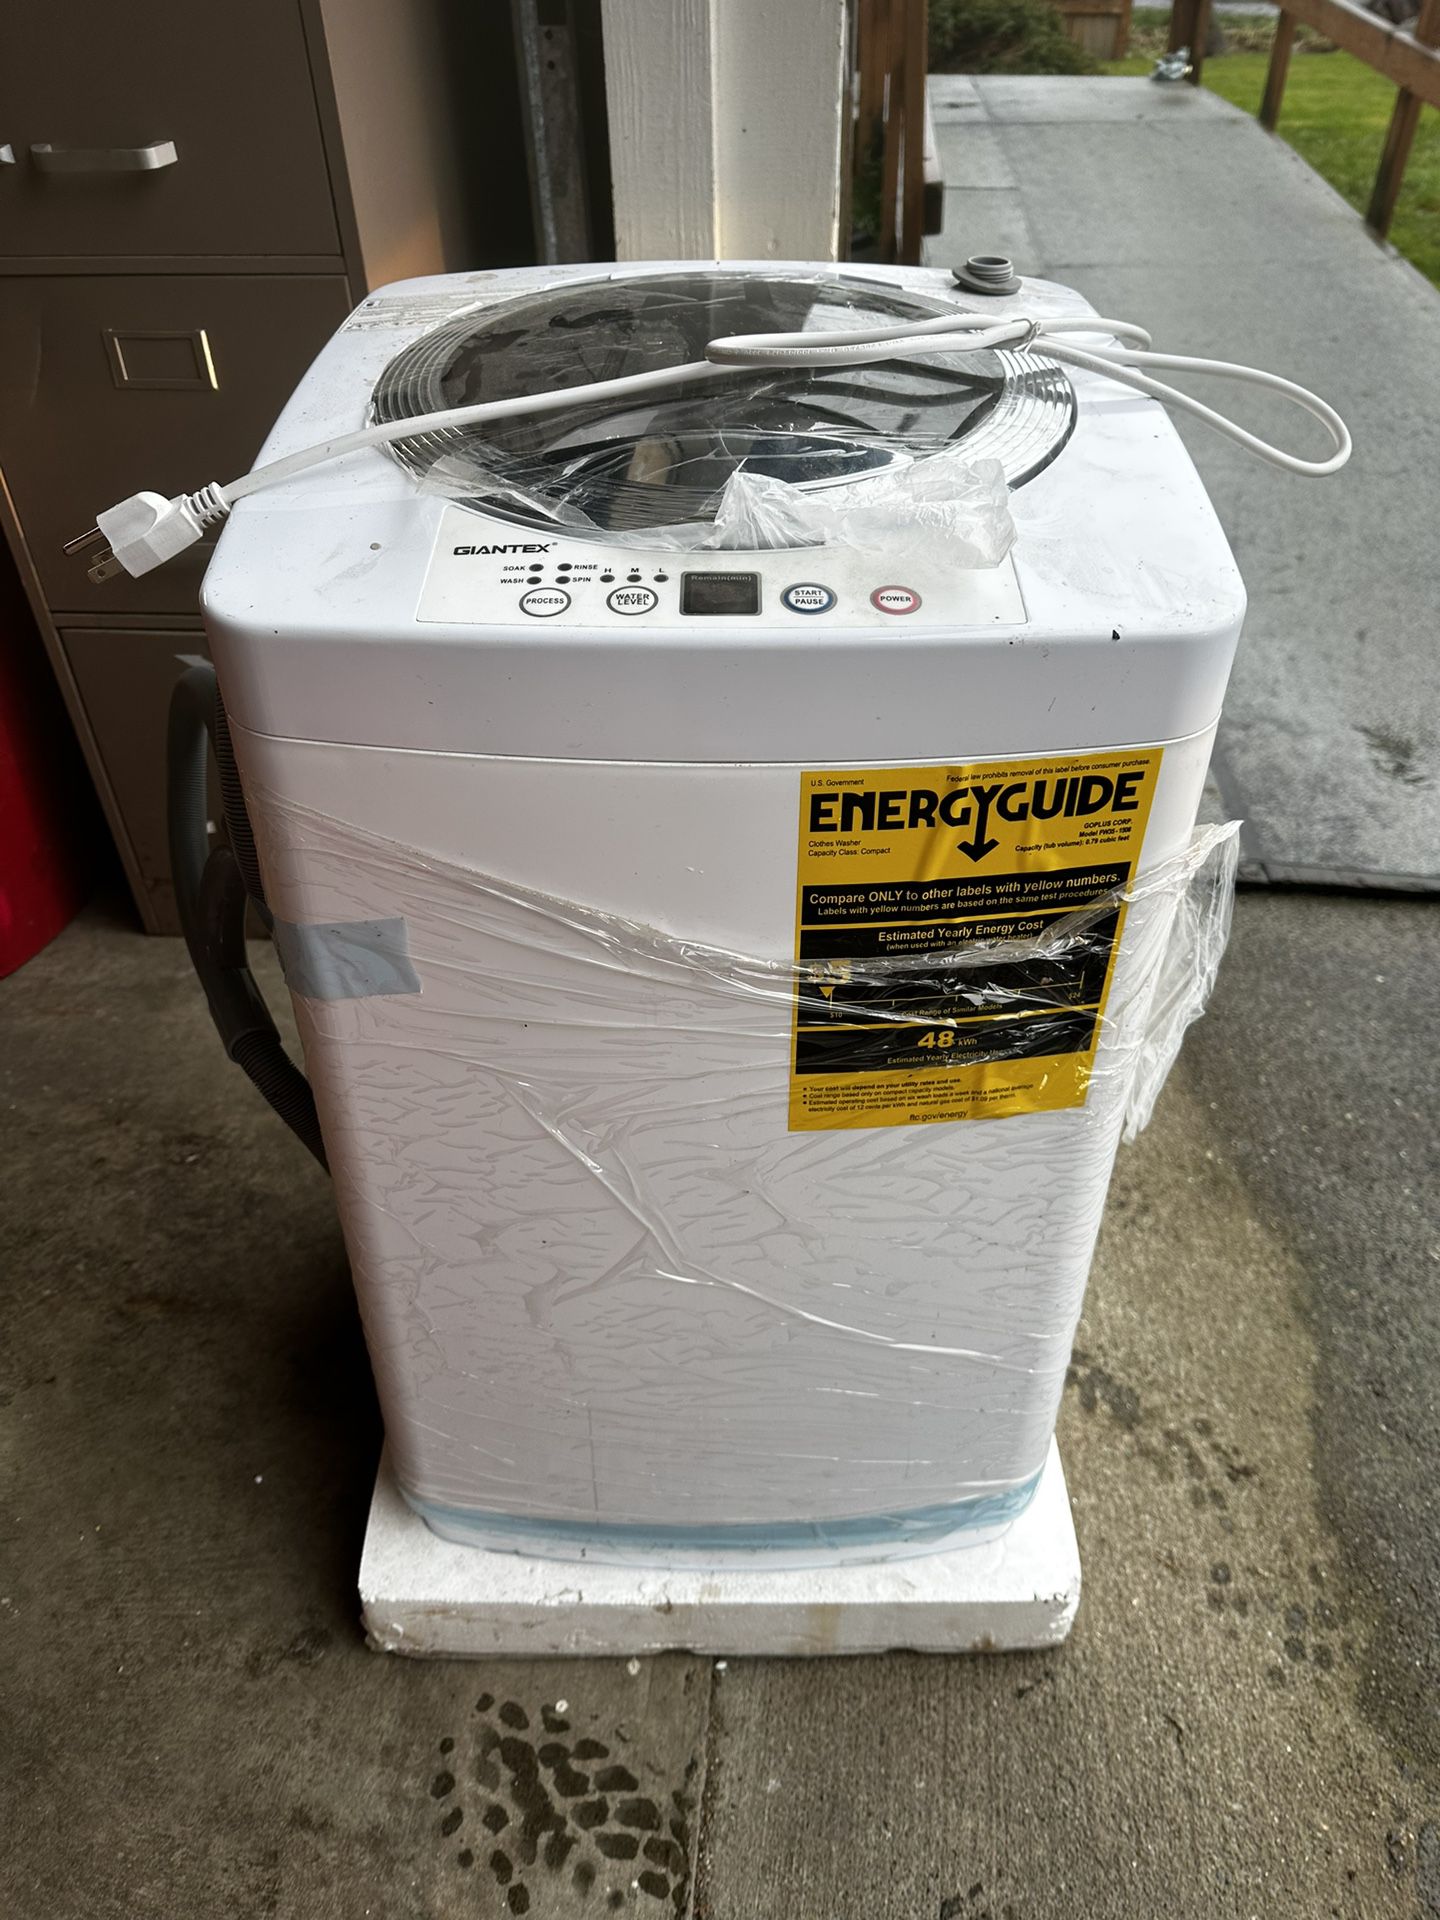 Giantex Portable Washing Machine for Sale in Lake Stevens, WA - OfferUp